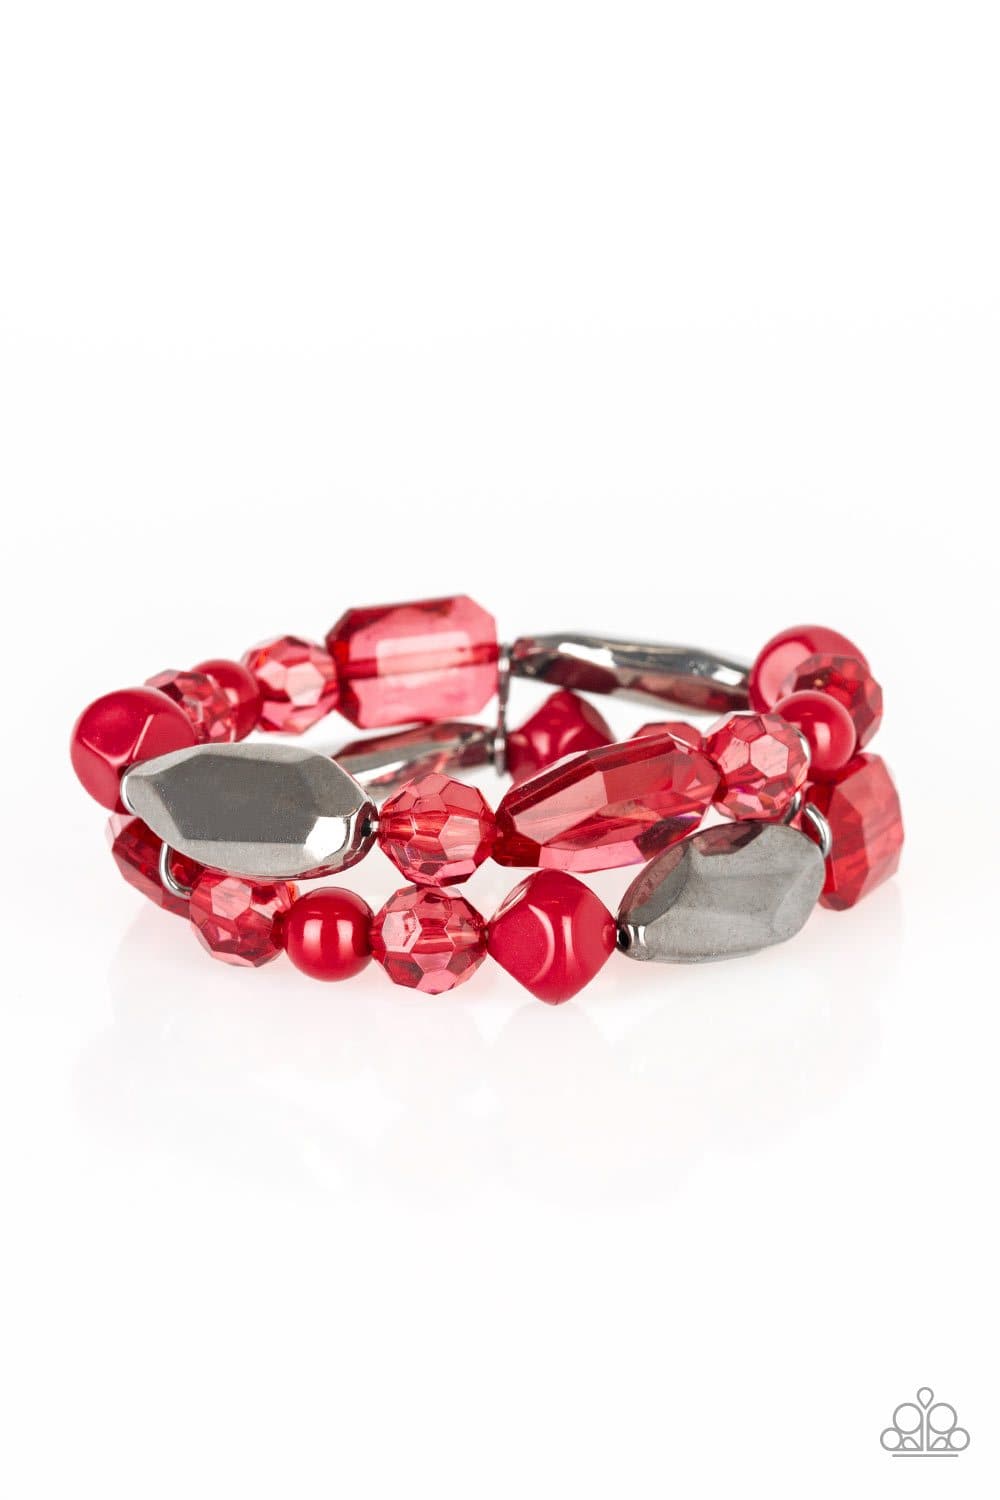 Rockin Rock Candy - Red - GlaMarous Titi Jewels